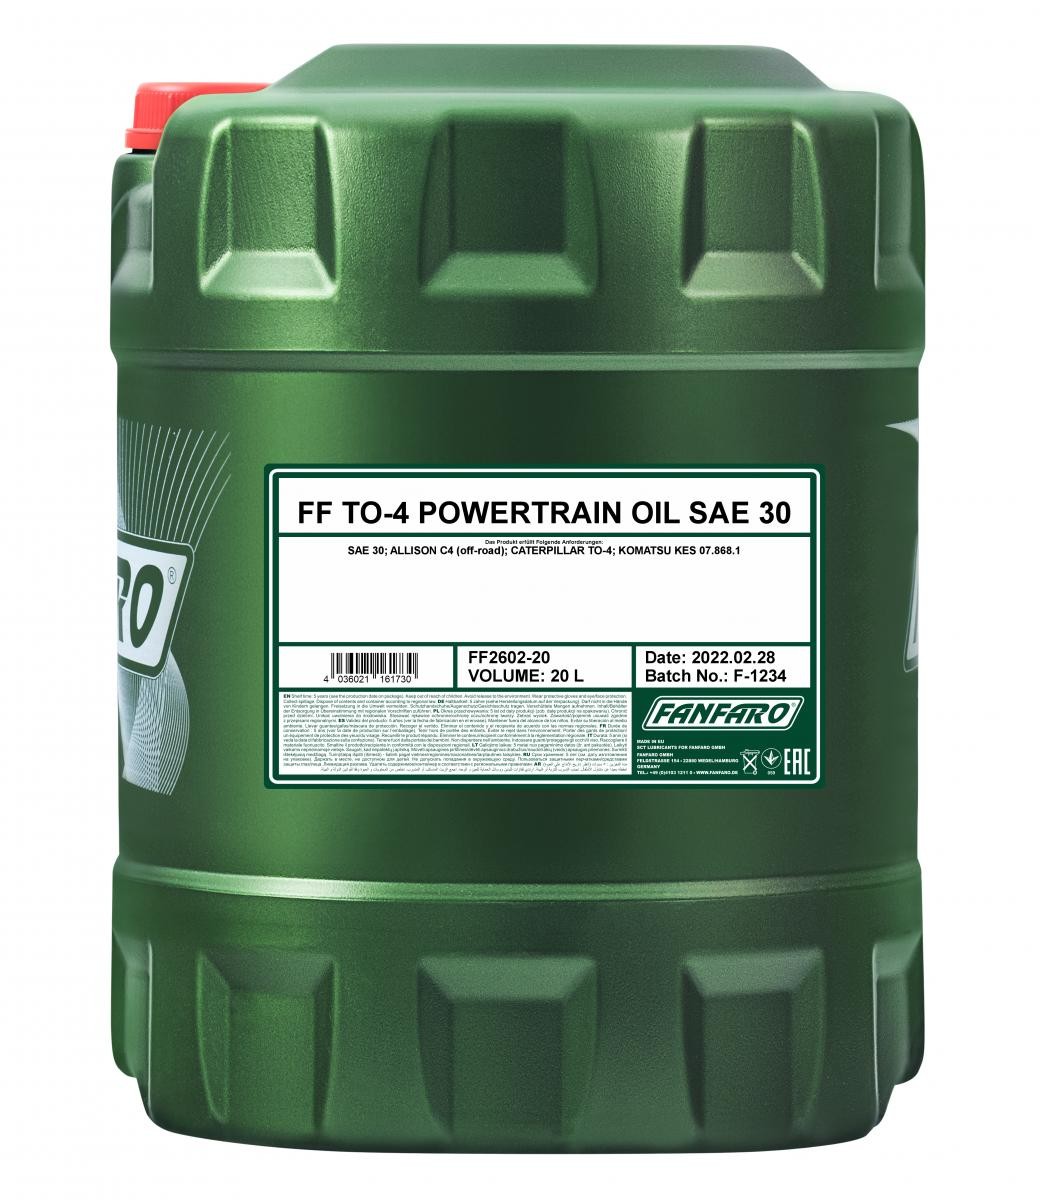 FANFARO TO-4 POWERTRAIN OIL SAE 30, Capacity: 20l CATERPILLAR TO-4, KOMATSU KES 07.868.1, ALLISON C4(off-road) Transmission oil FF2602-20 buy